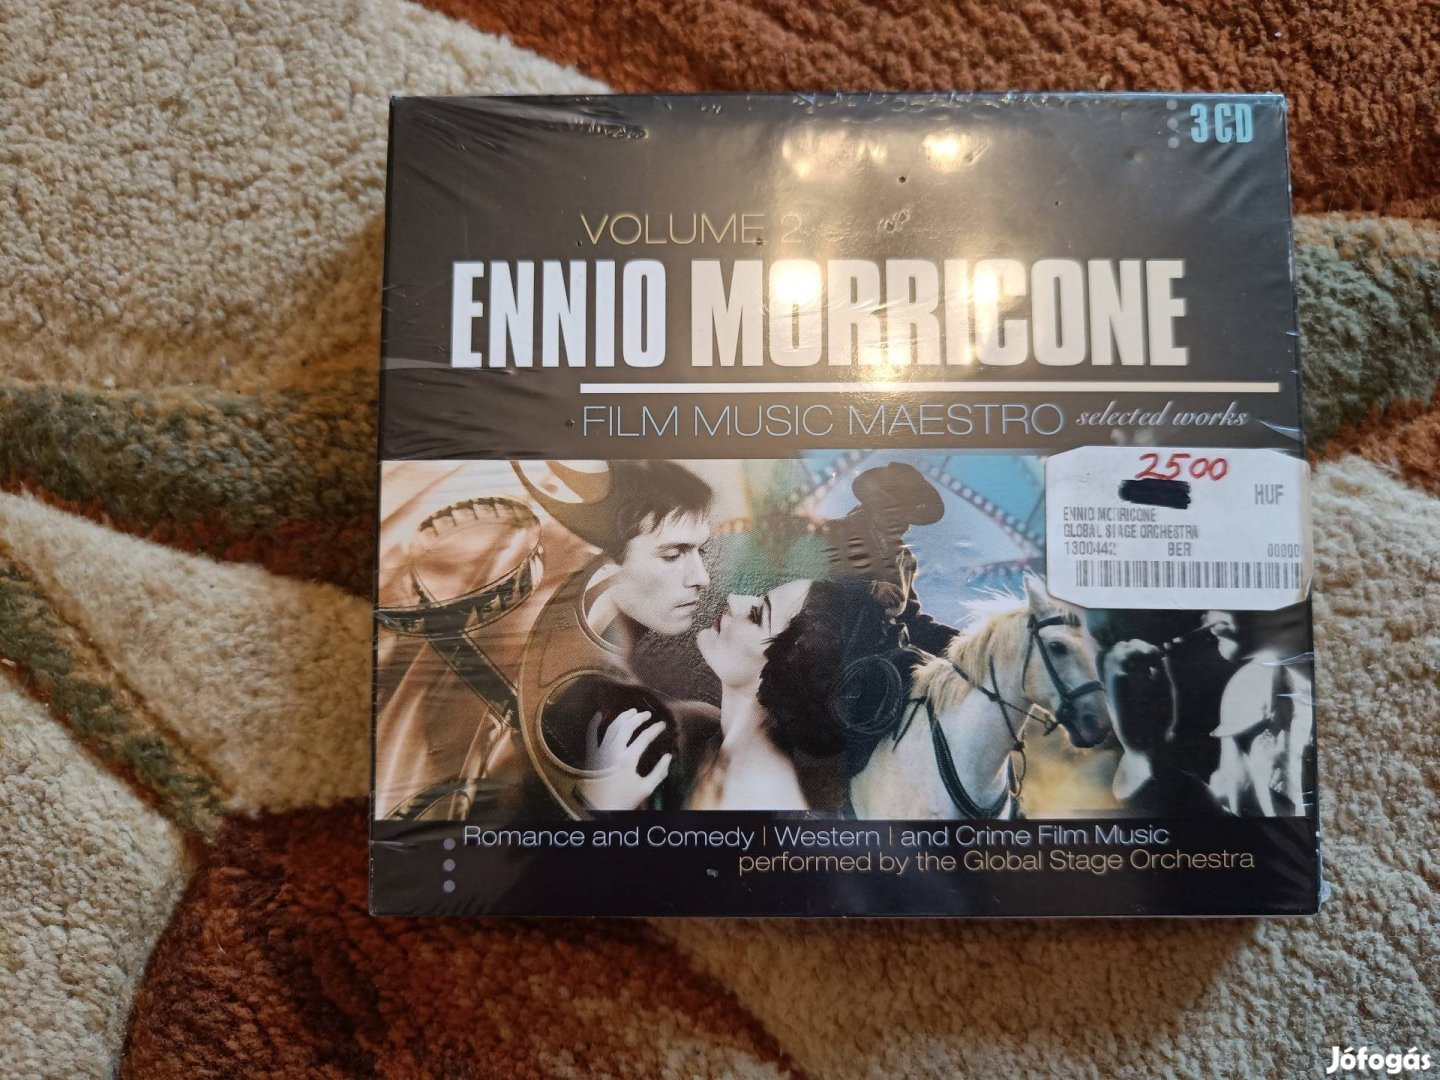 Ennio Morricone film music maestro volume 2, 3 db os cd